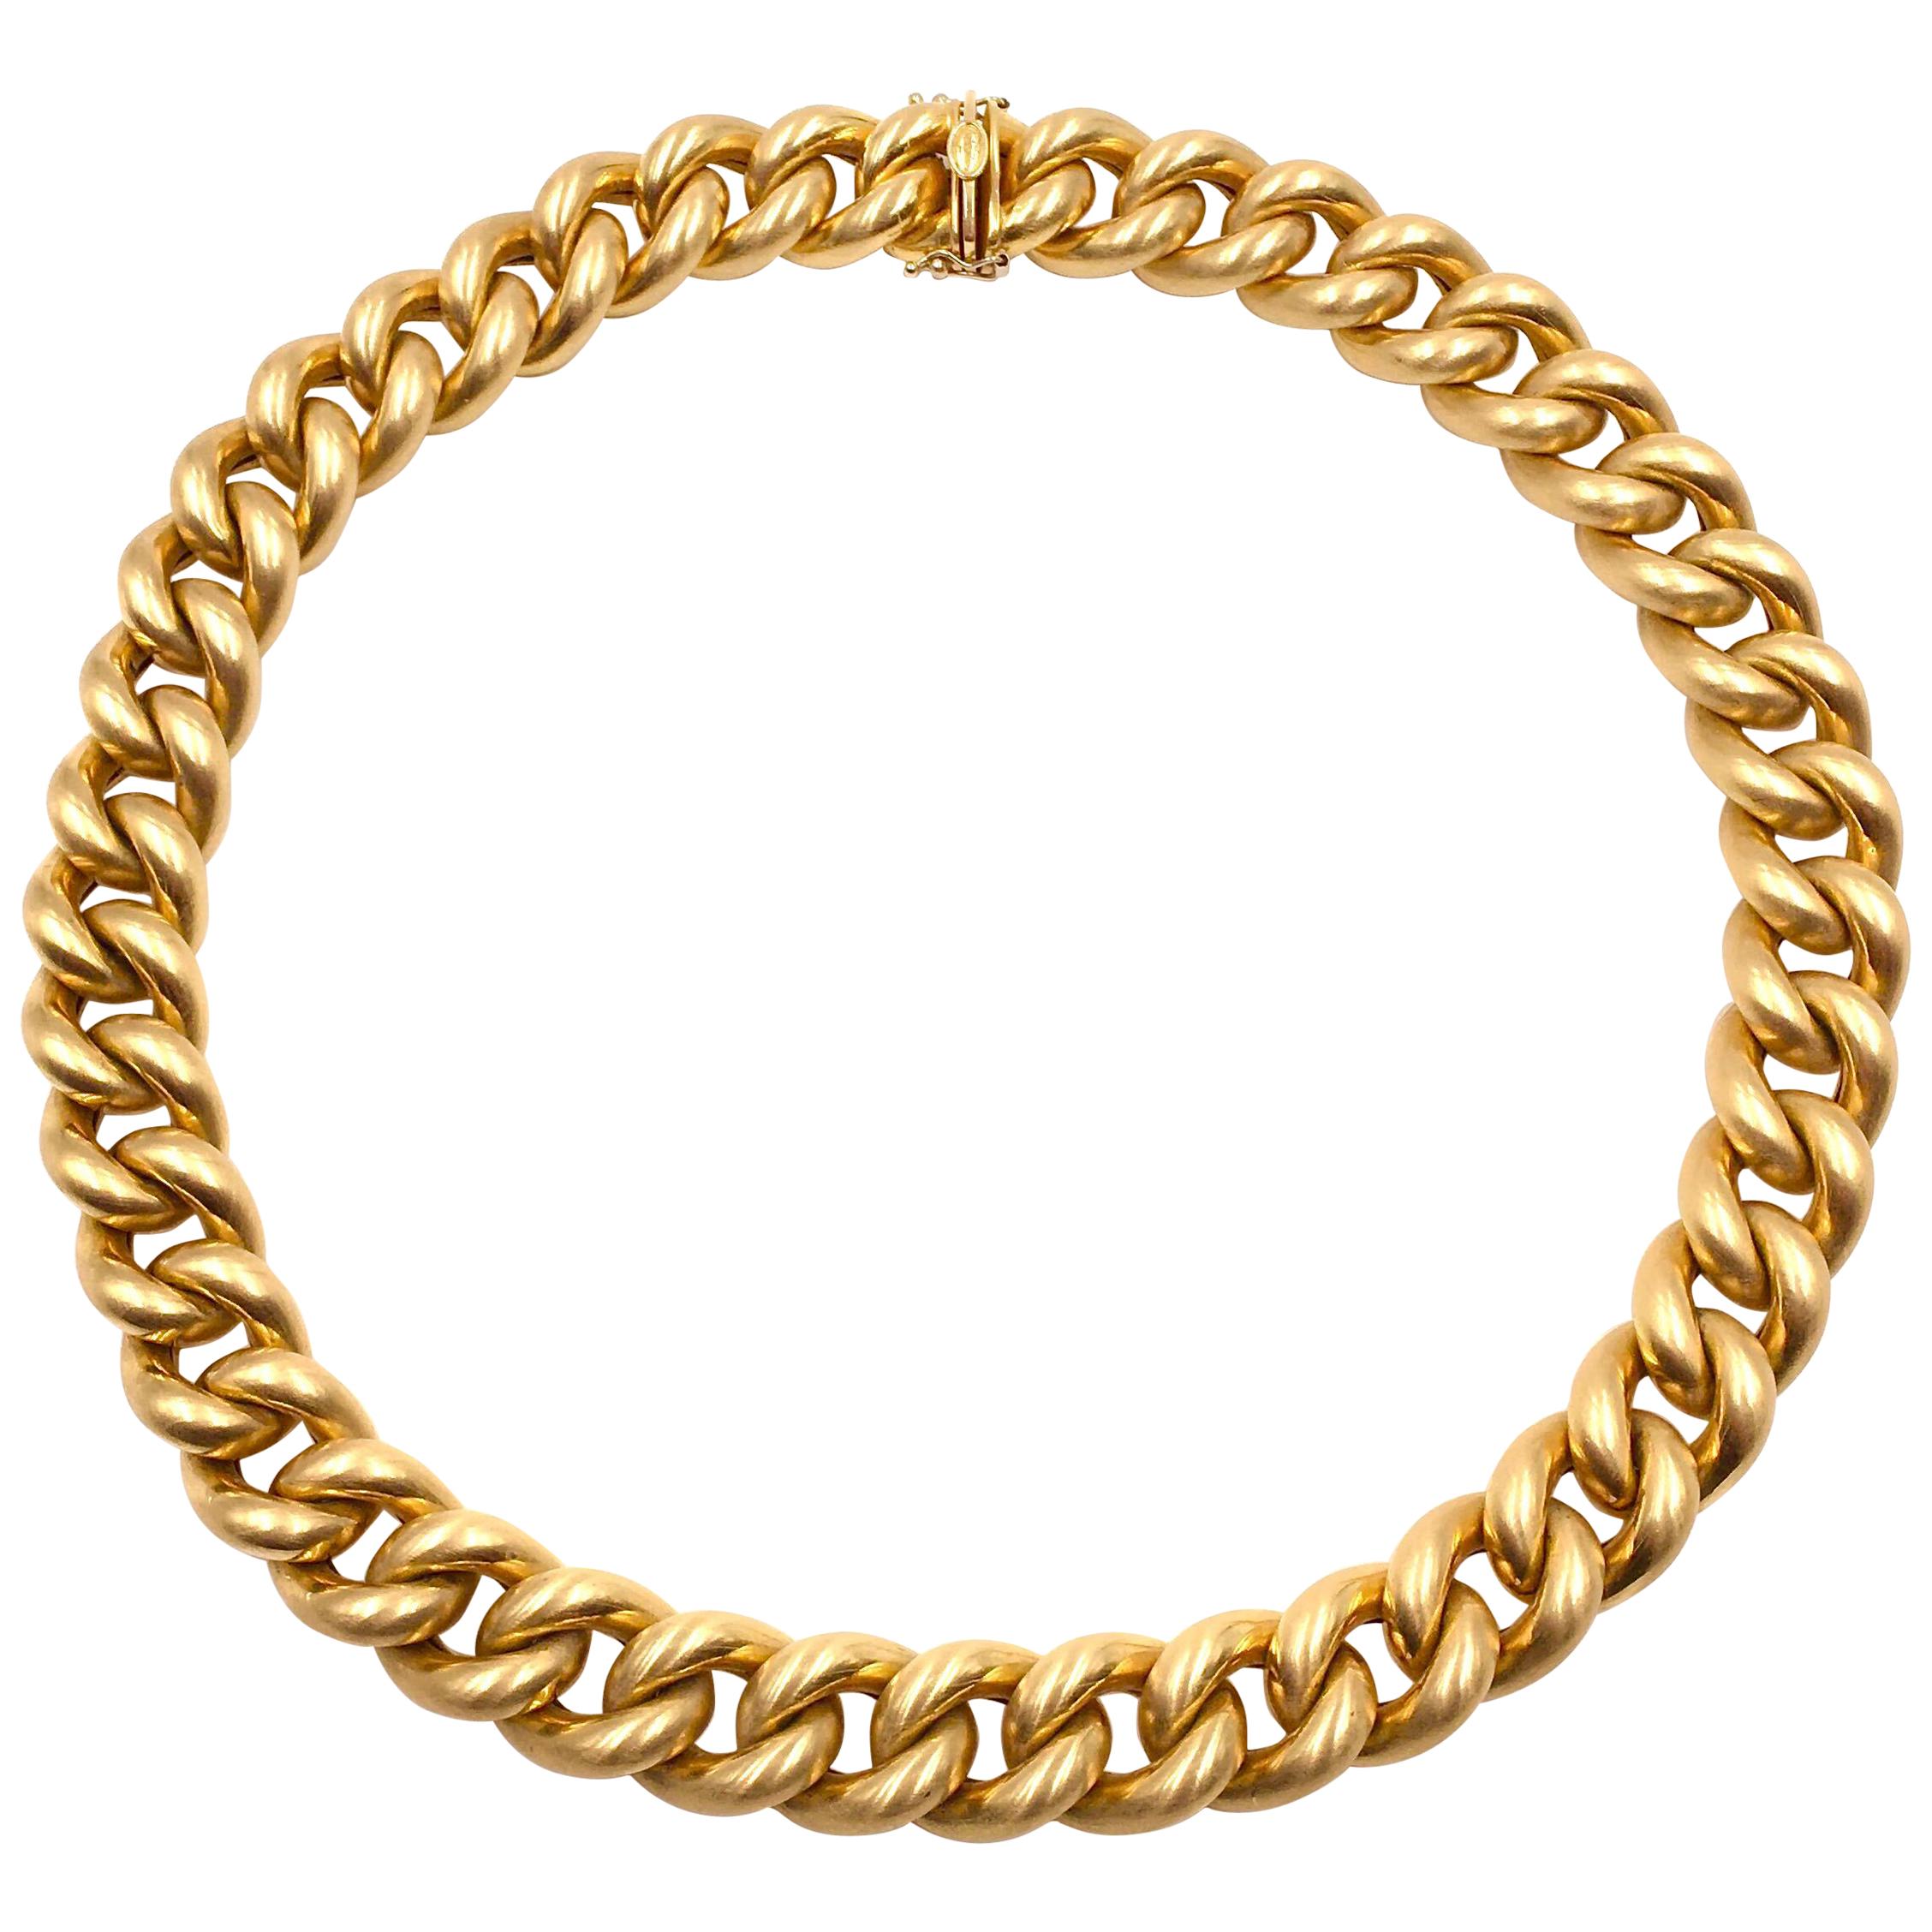 18 Karat Yellow Gold Link Necklace